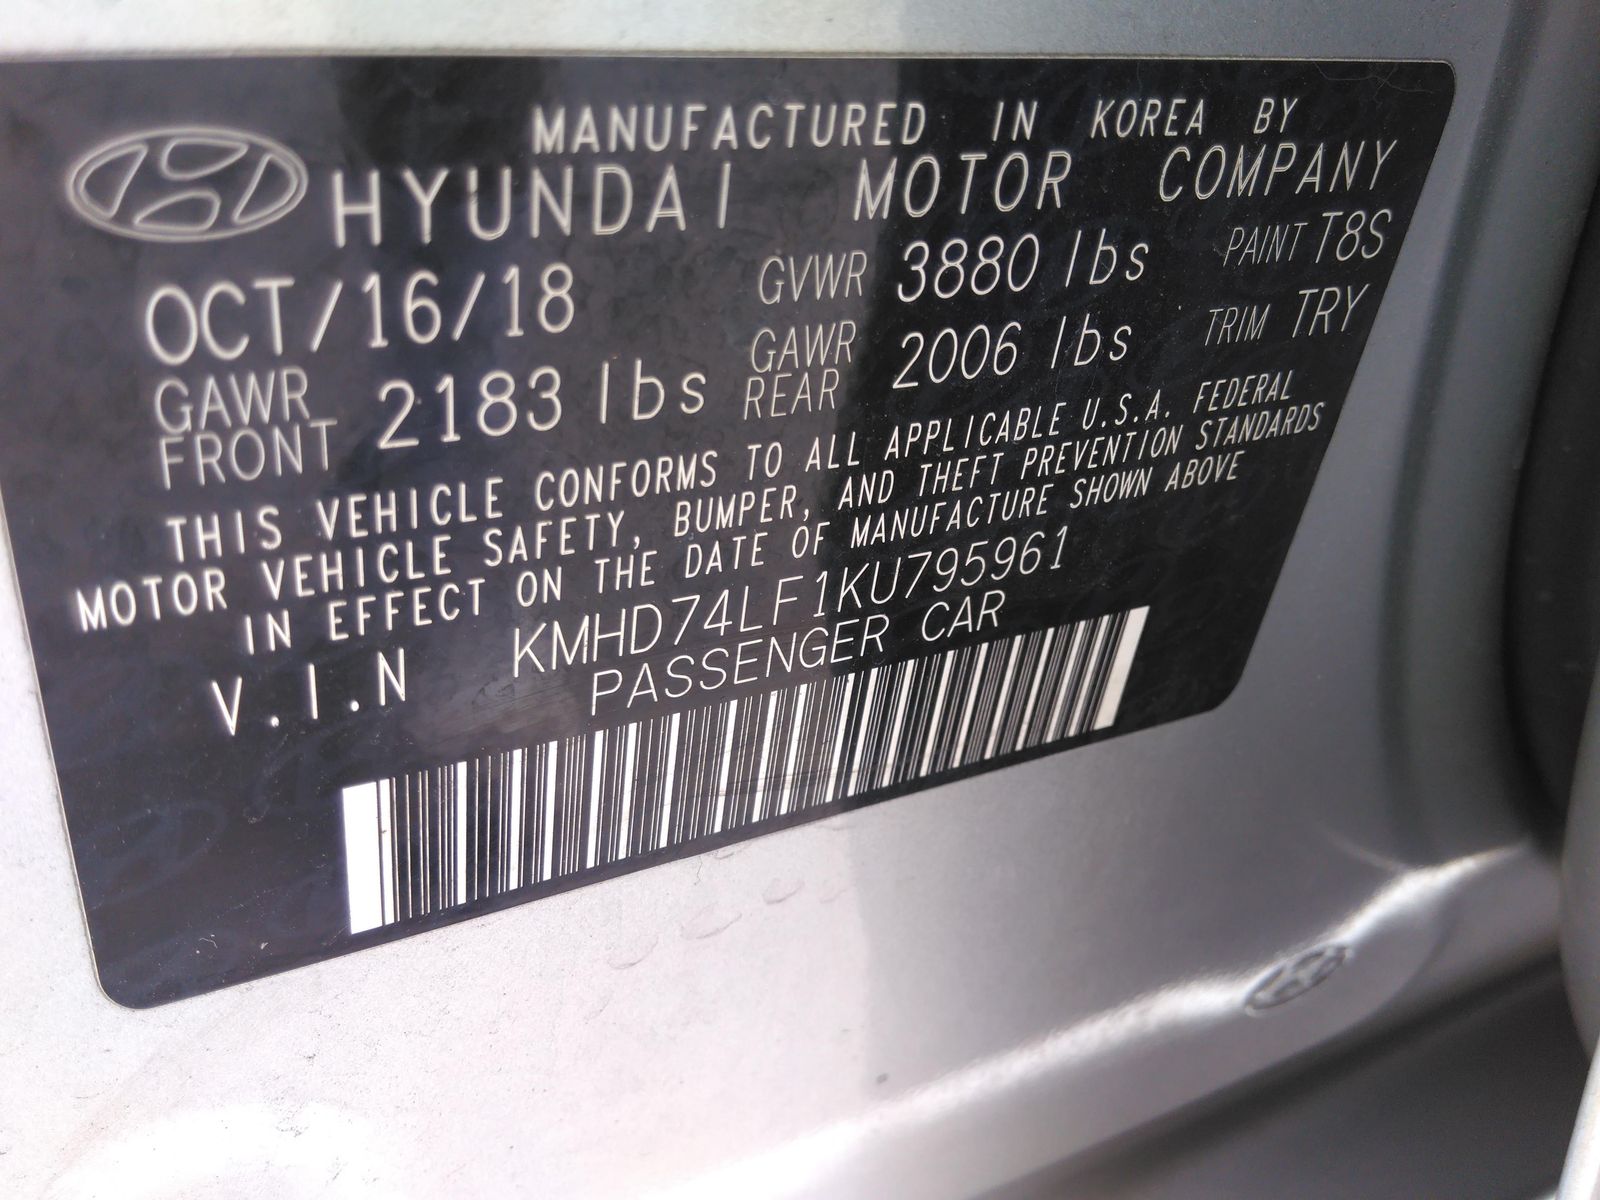 2019 Hyundai Elantra SE FWD